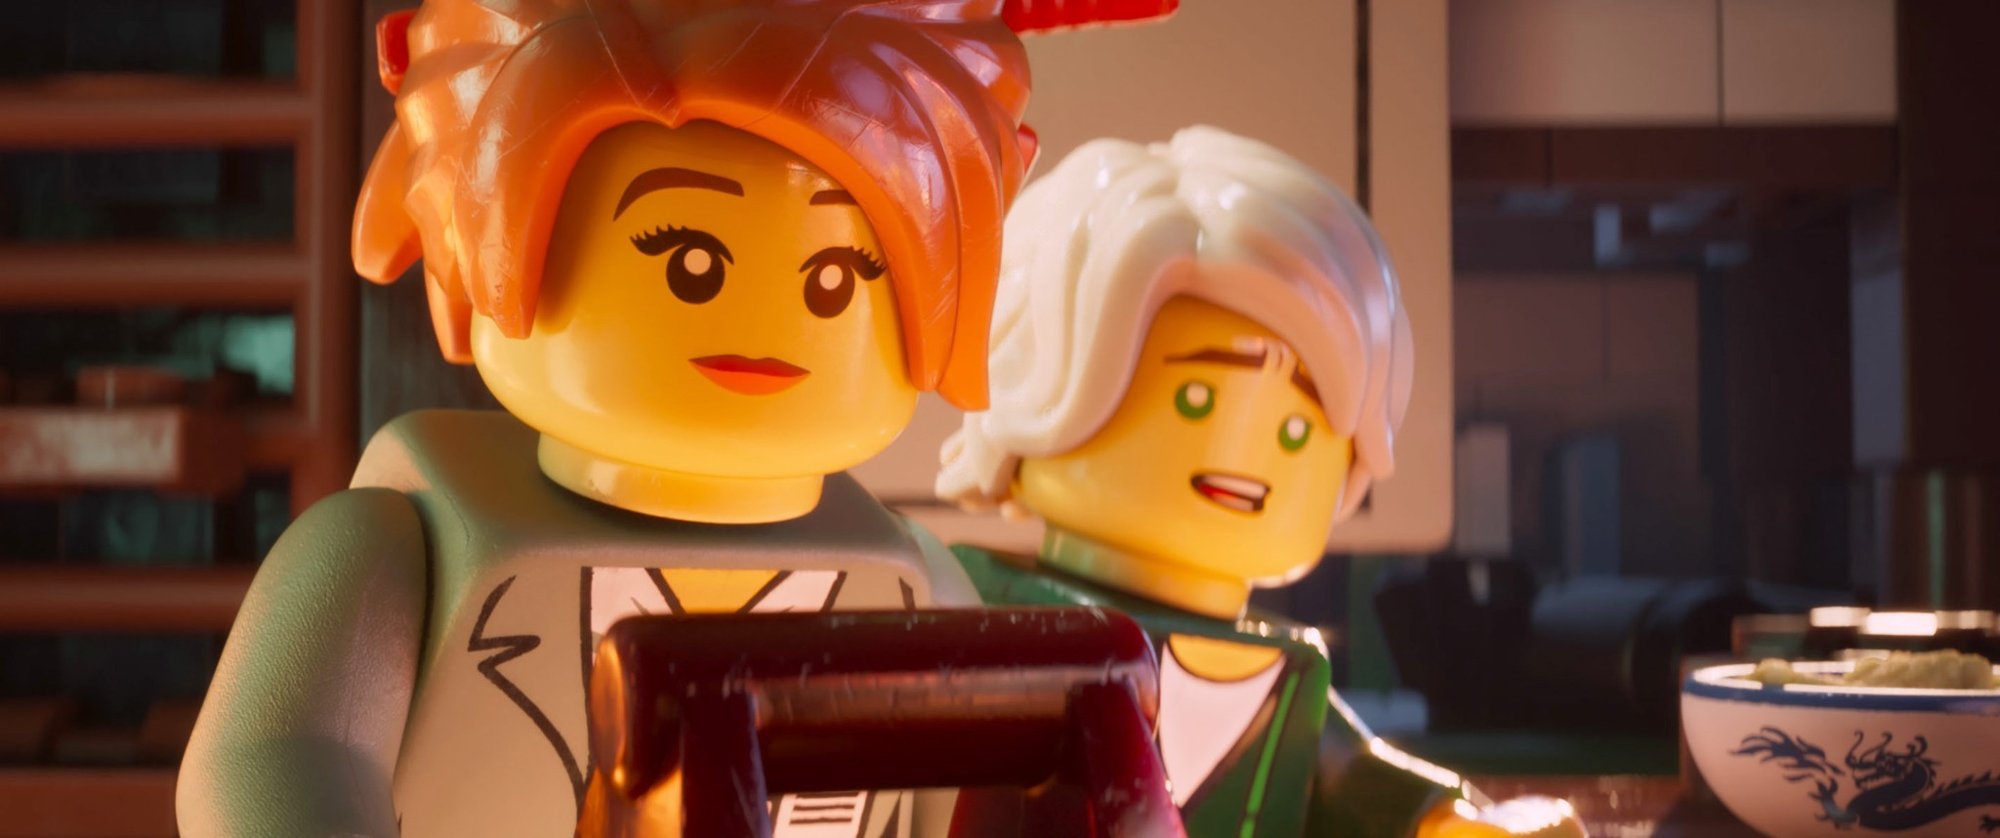 Koko and Lloyd from Warner Bros. Pictures' The Lego Ninjago Movie (2017)